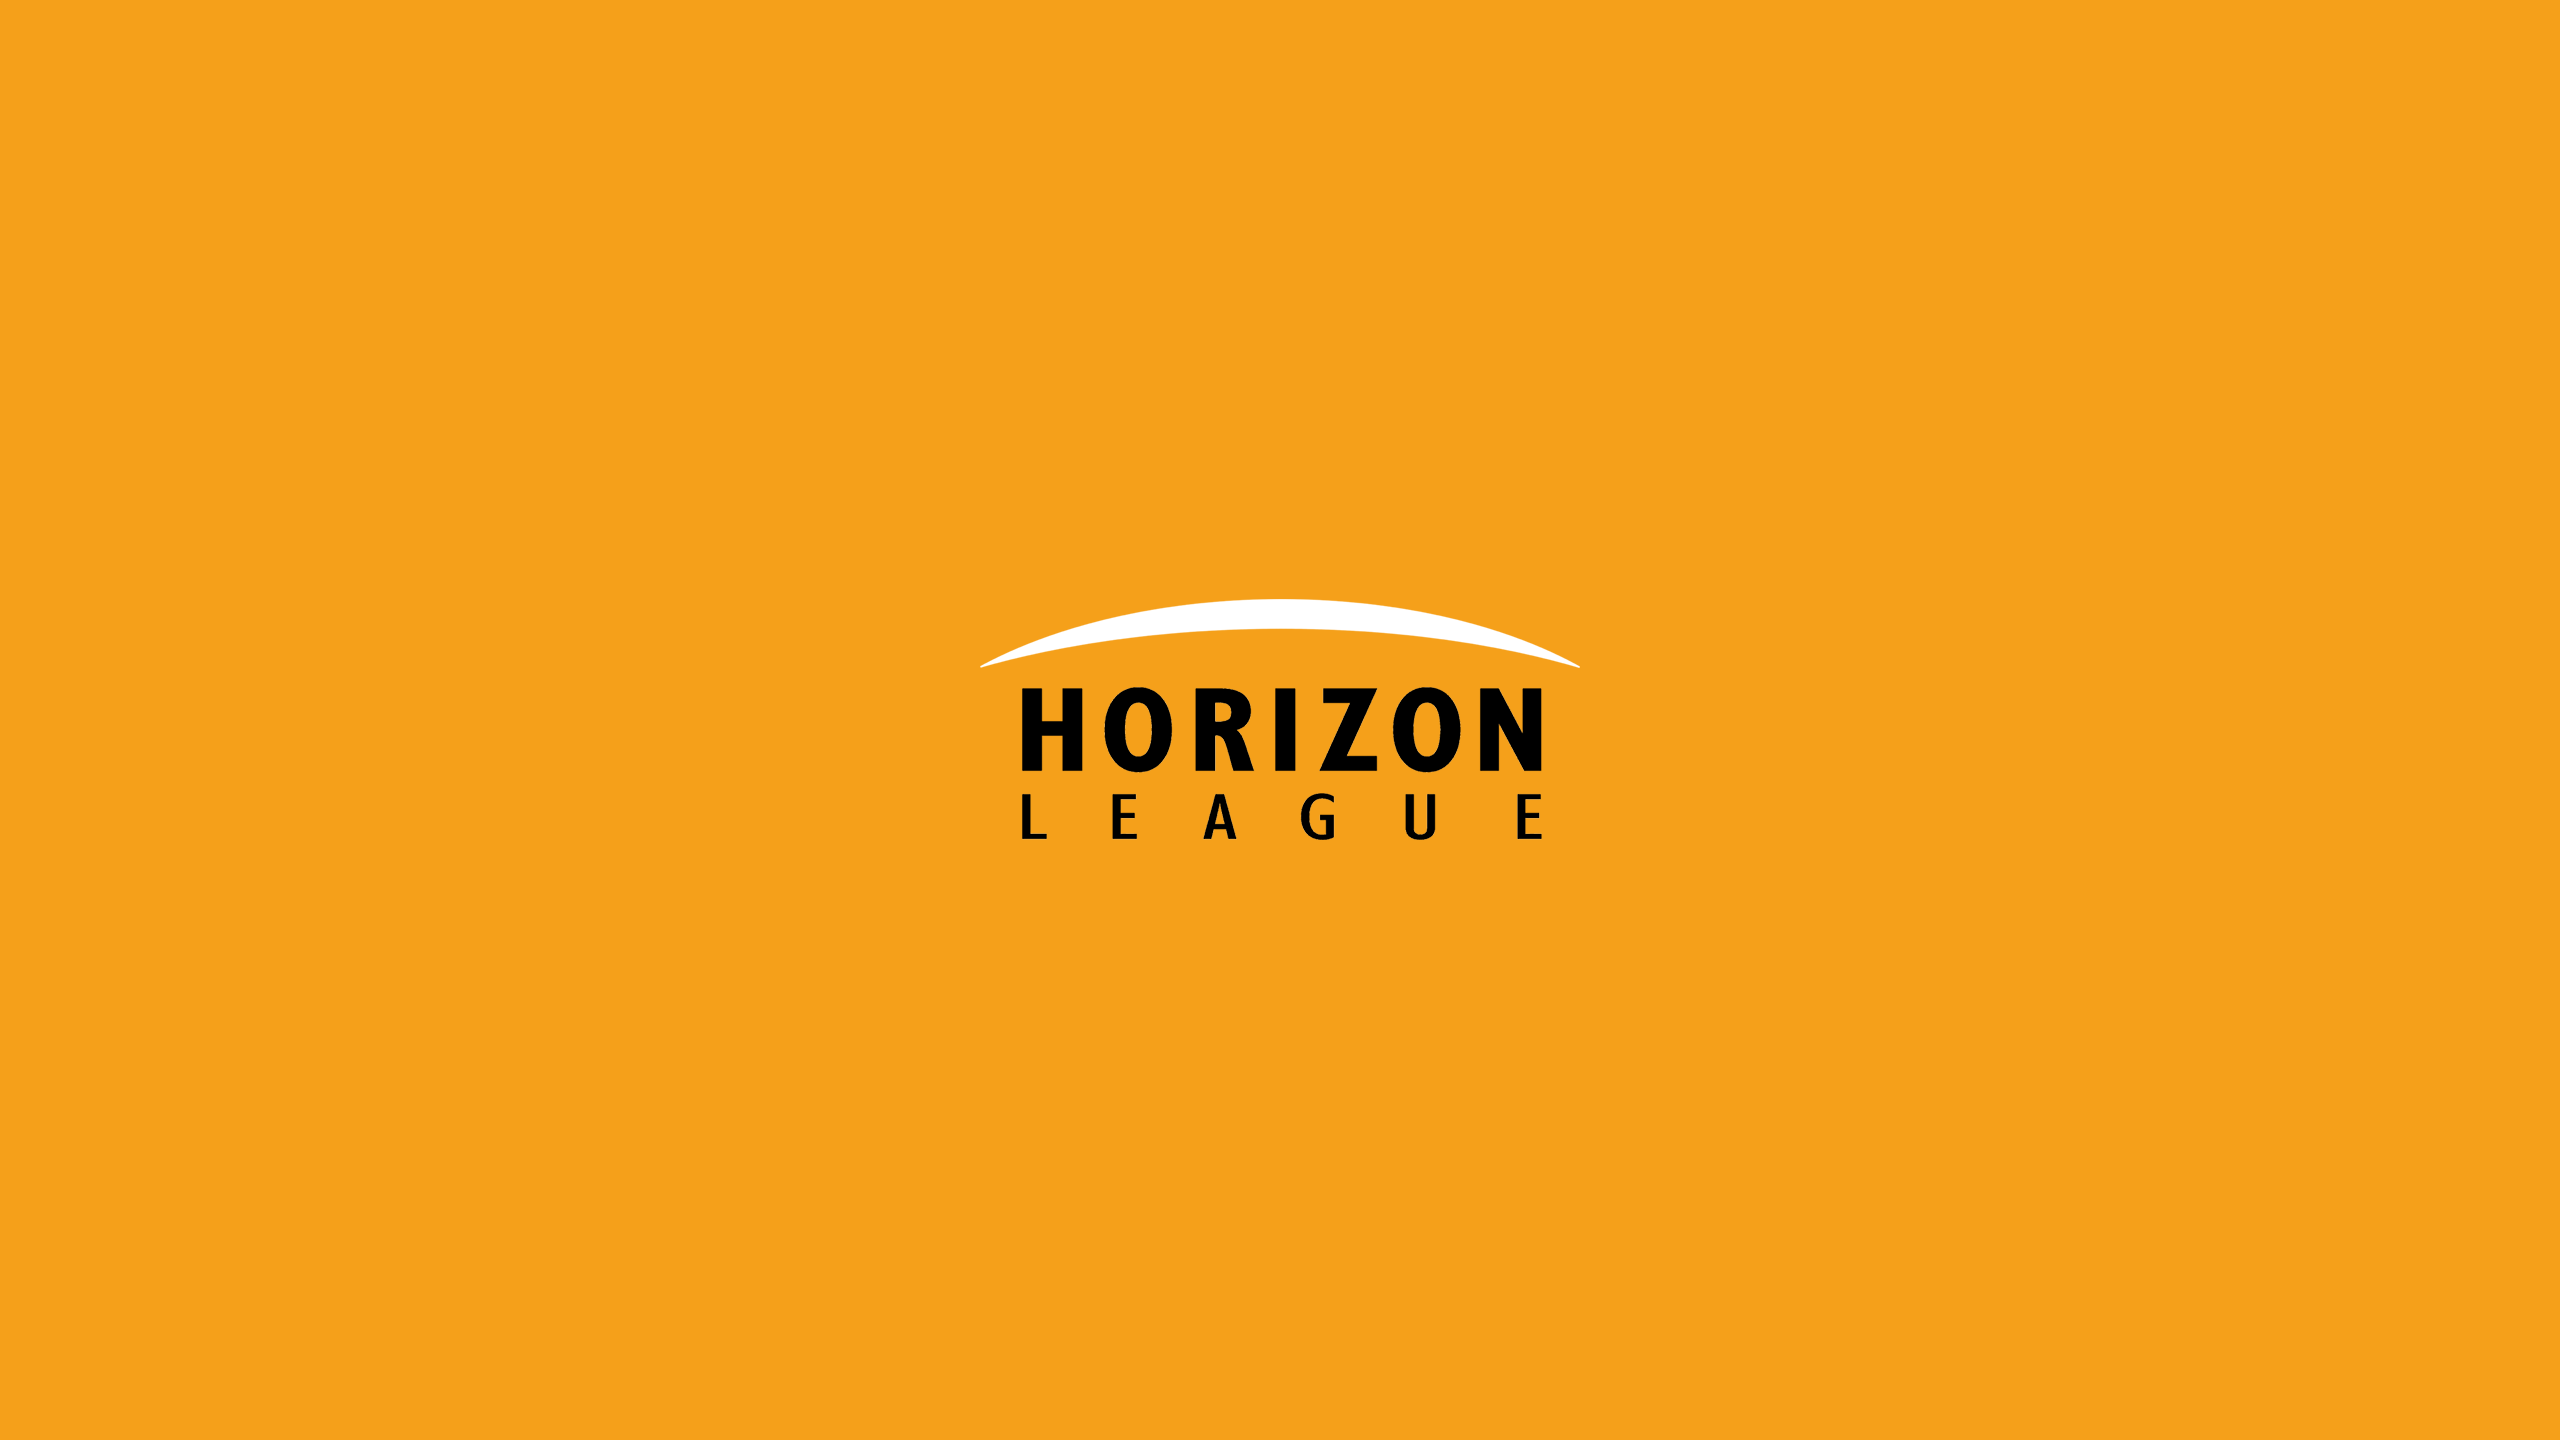 Horizon League Basketball - NCAAB - Square Bettor